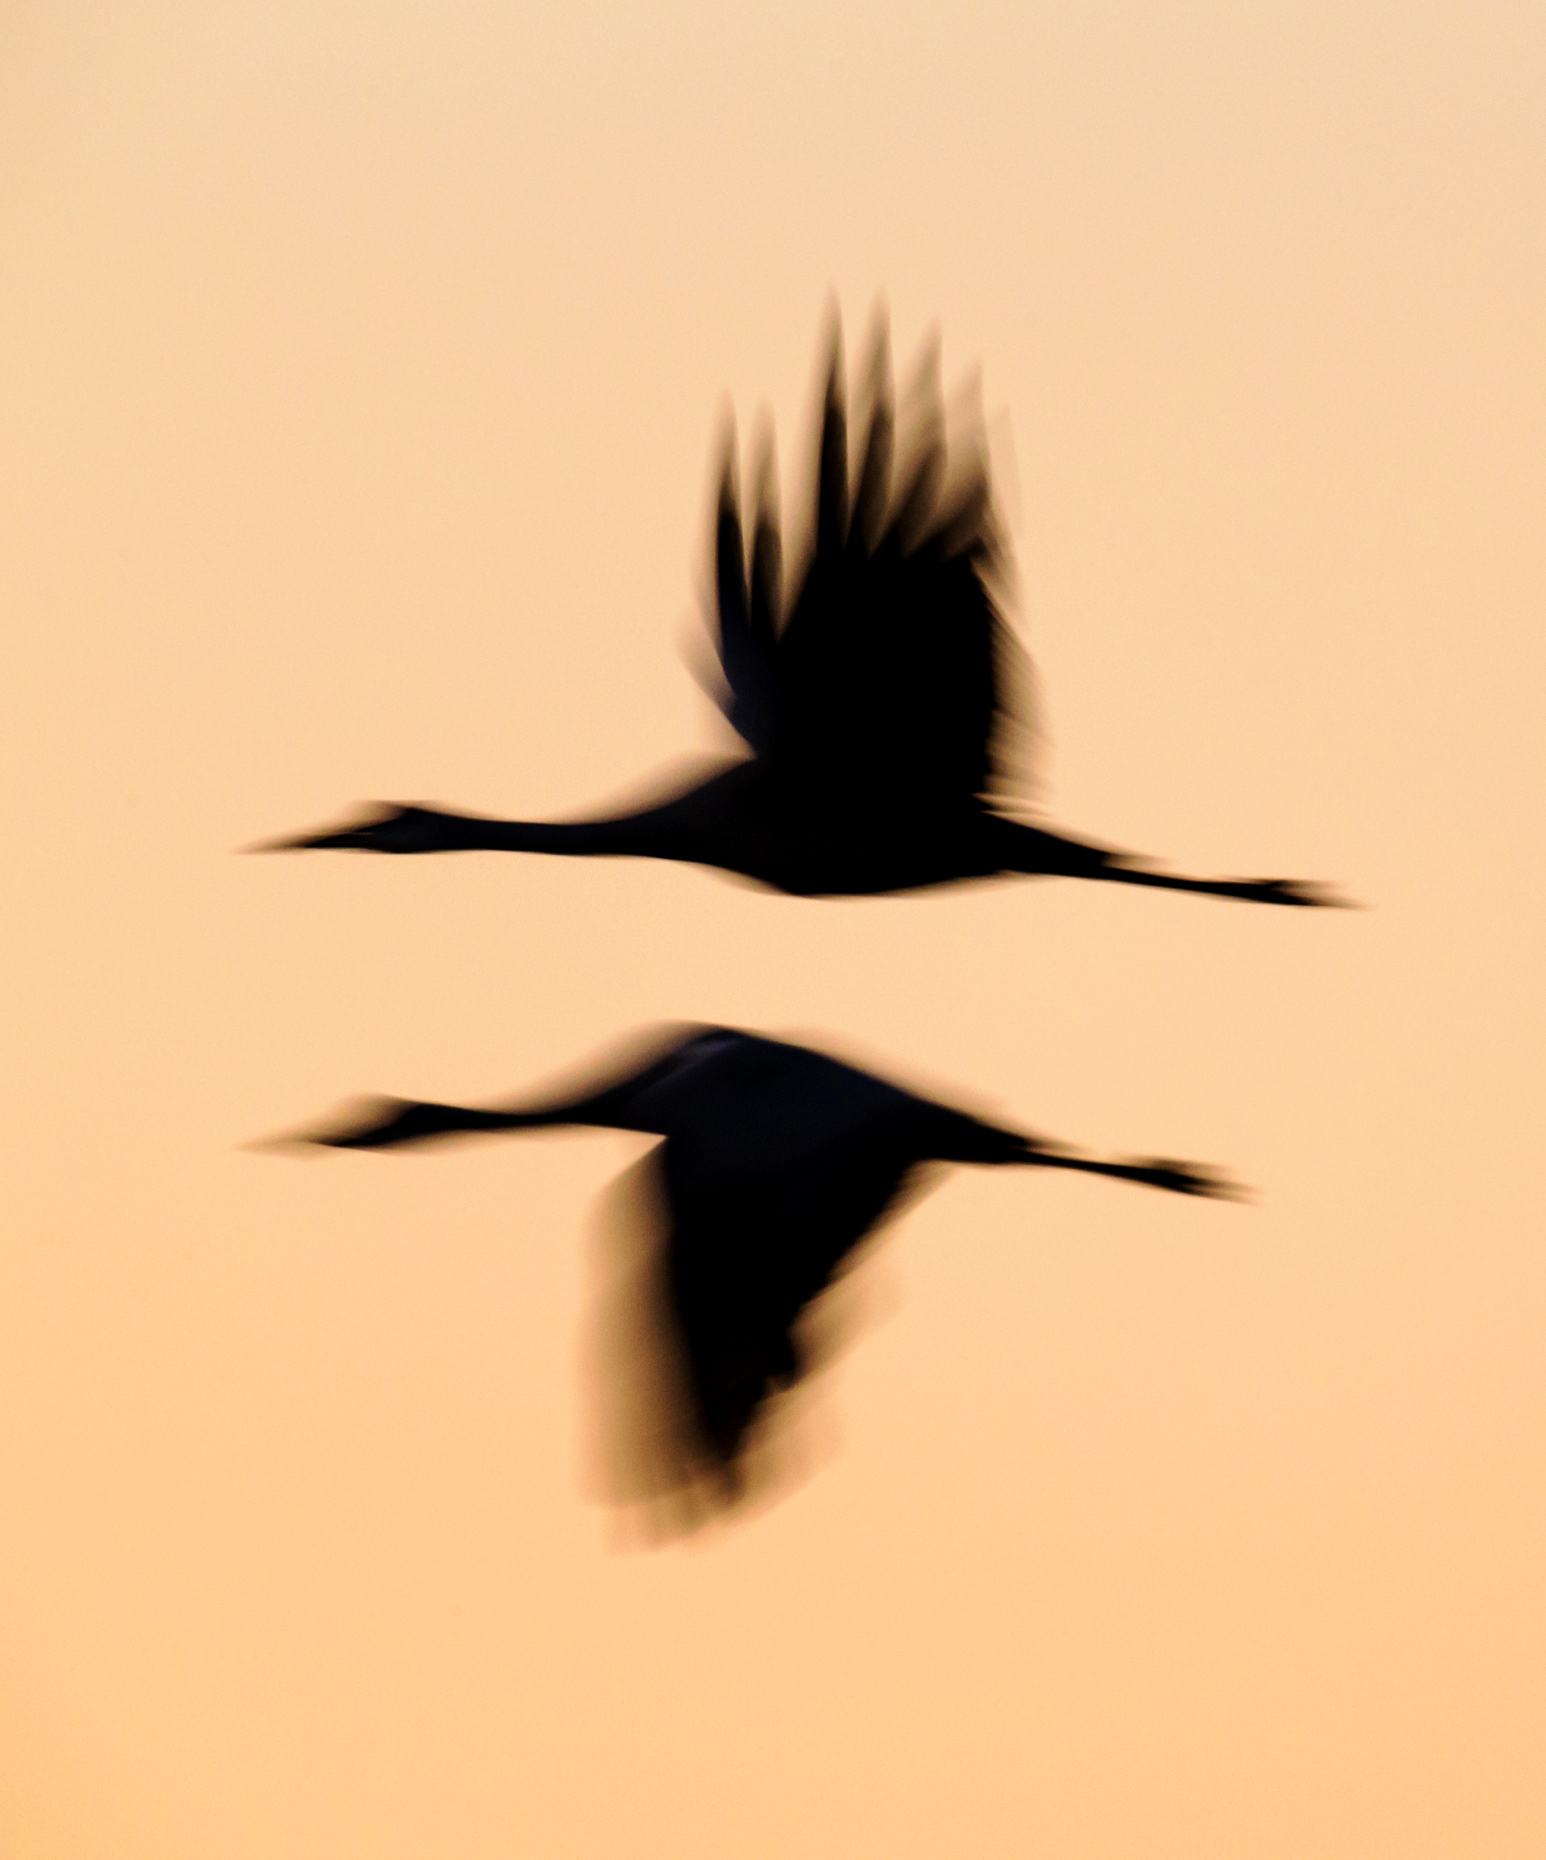 Pan - blur - motion photograph of Sandhill Cranes in flight at sunset, Monte Vista National Wildlife Refuge, Colorado, USA